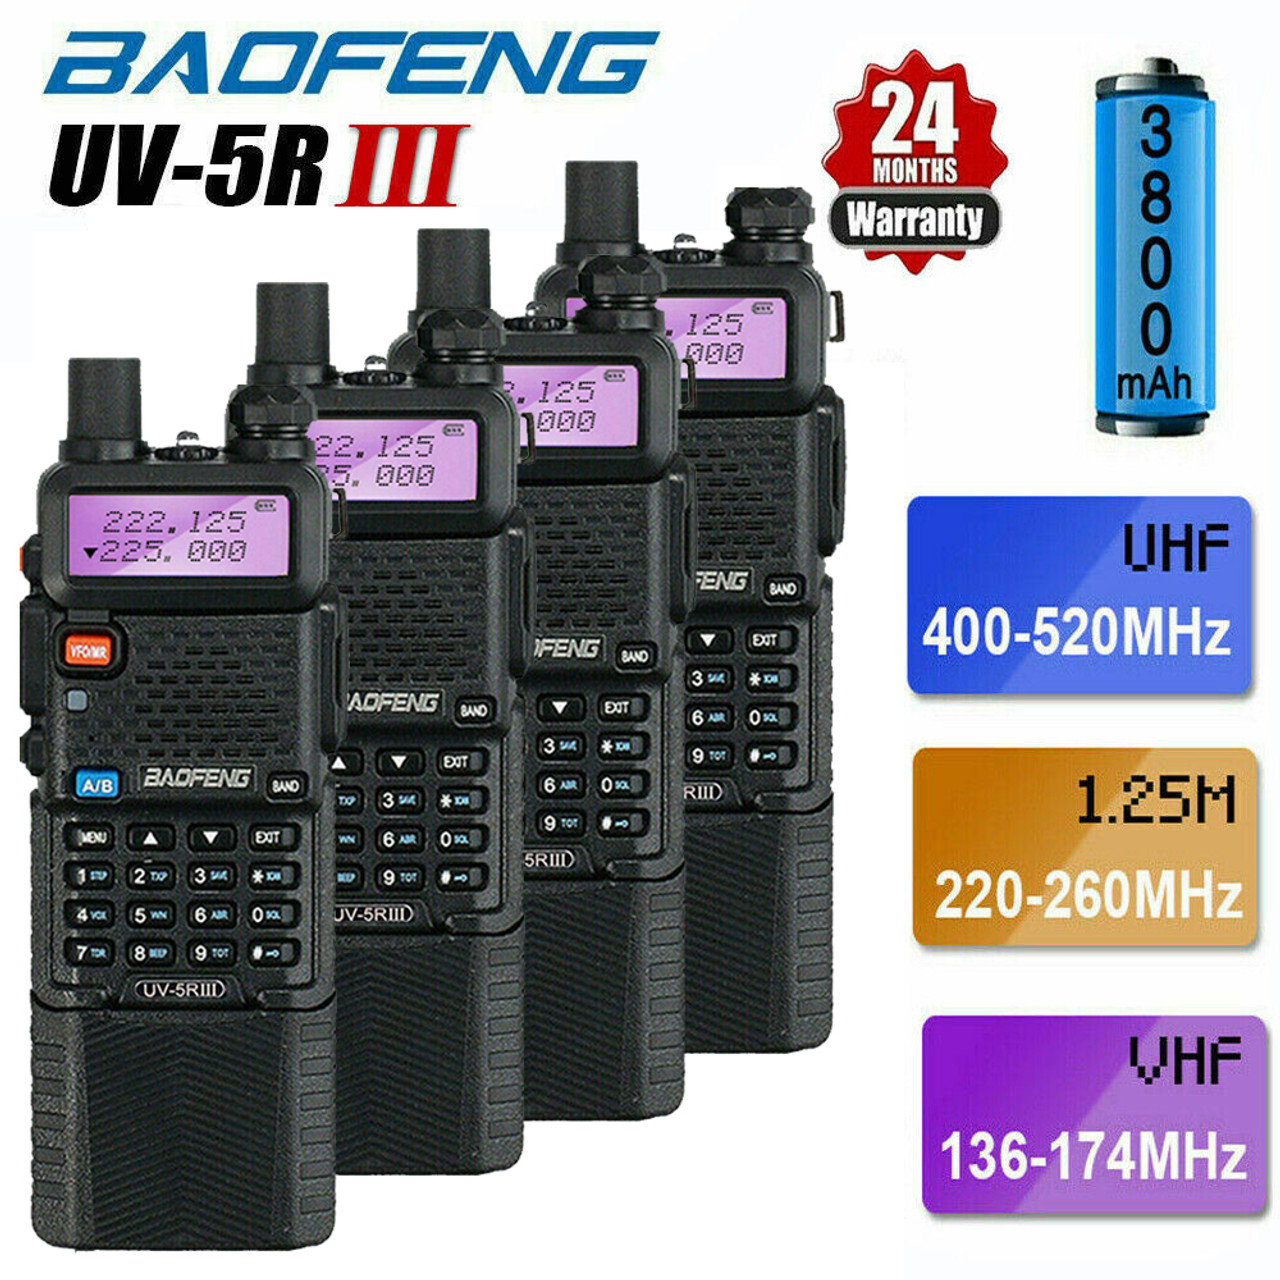 BAOFENG UV-5R 8W High Power 3800 MAH Long Battery Dual Band